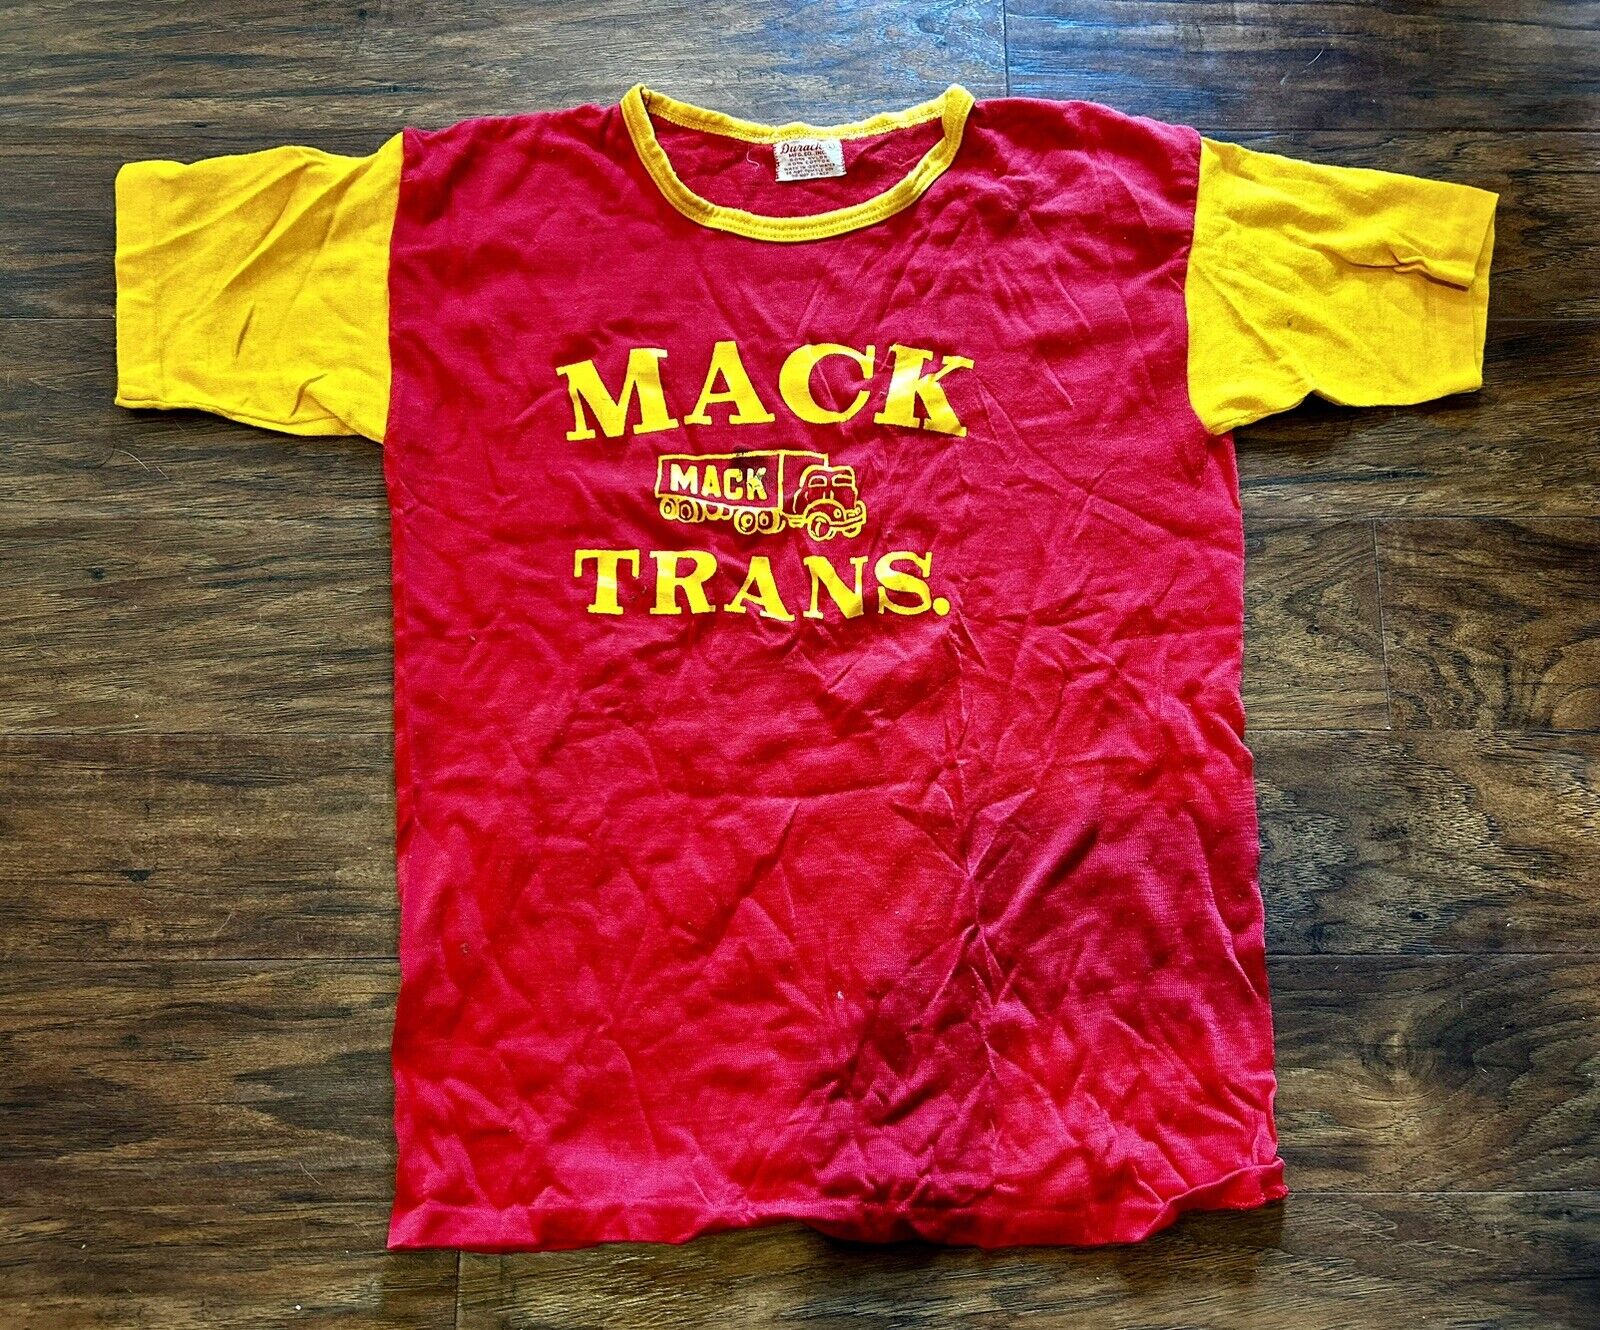 Vintage 1950’s/60’s Mack Transit Trucking Employee Shirt - Size Large